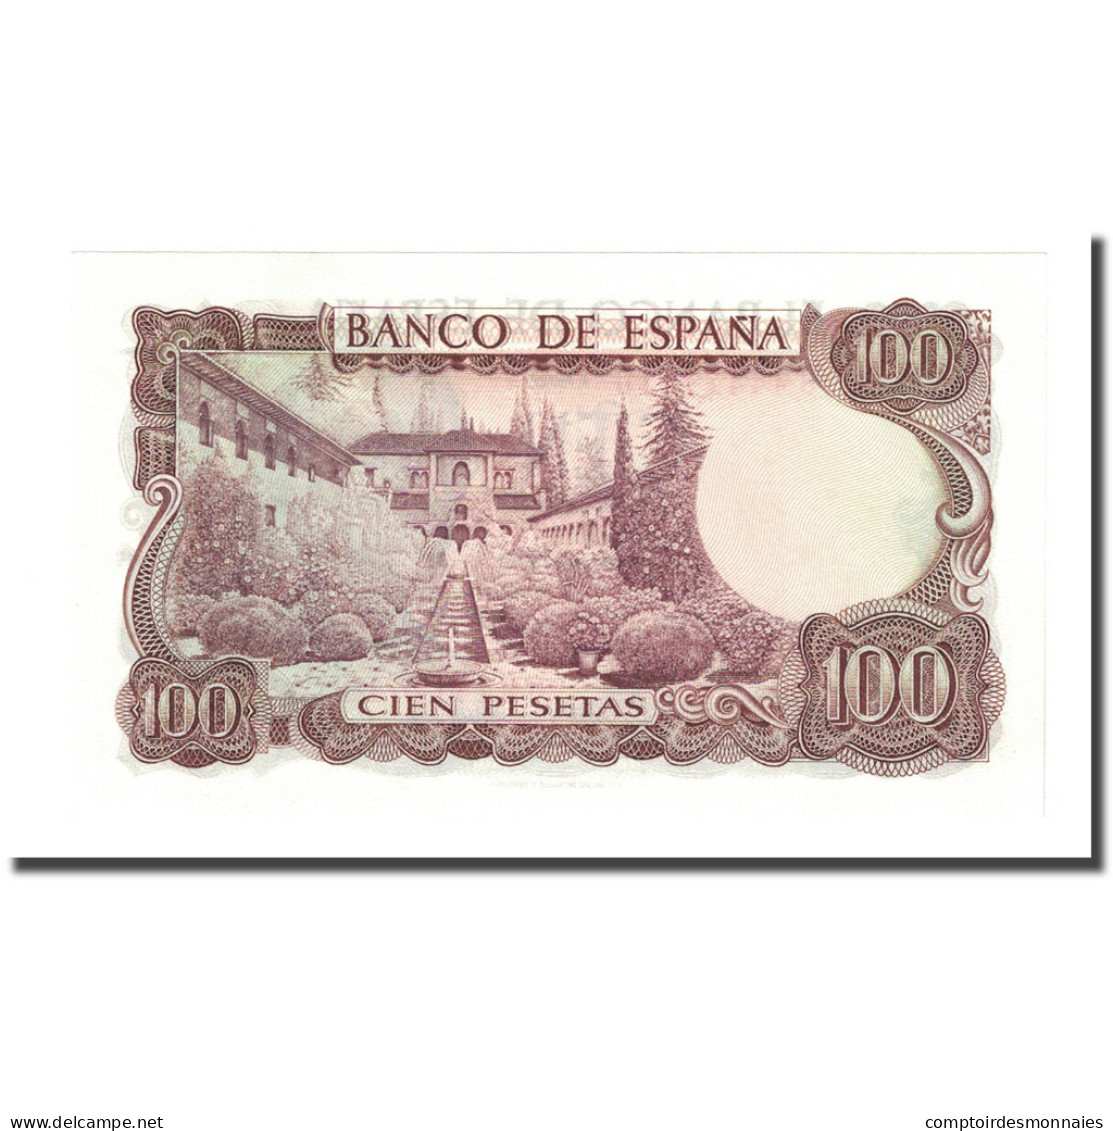 Billet, Espagne, 100 Pesetas, 1970-11-17, KM:152a, NEUF - 100 Pesetas